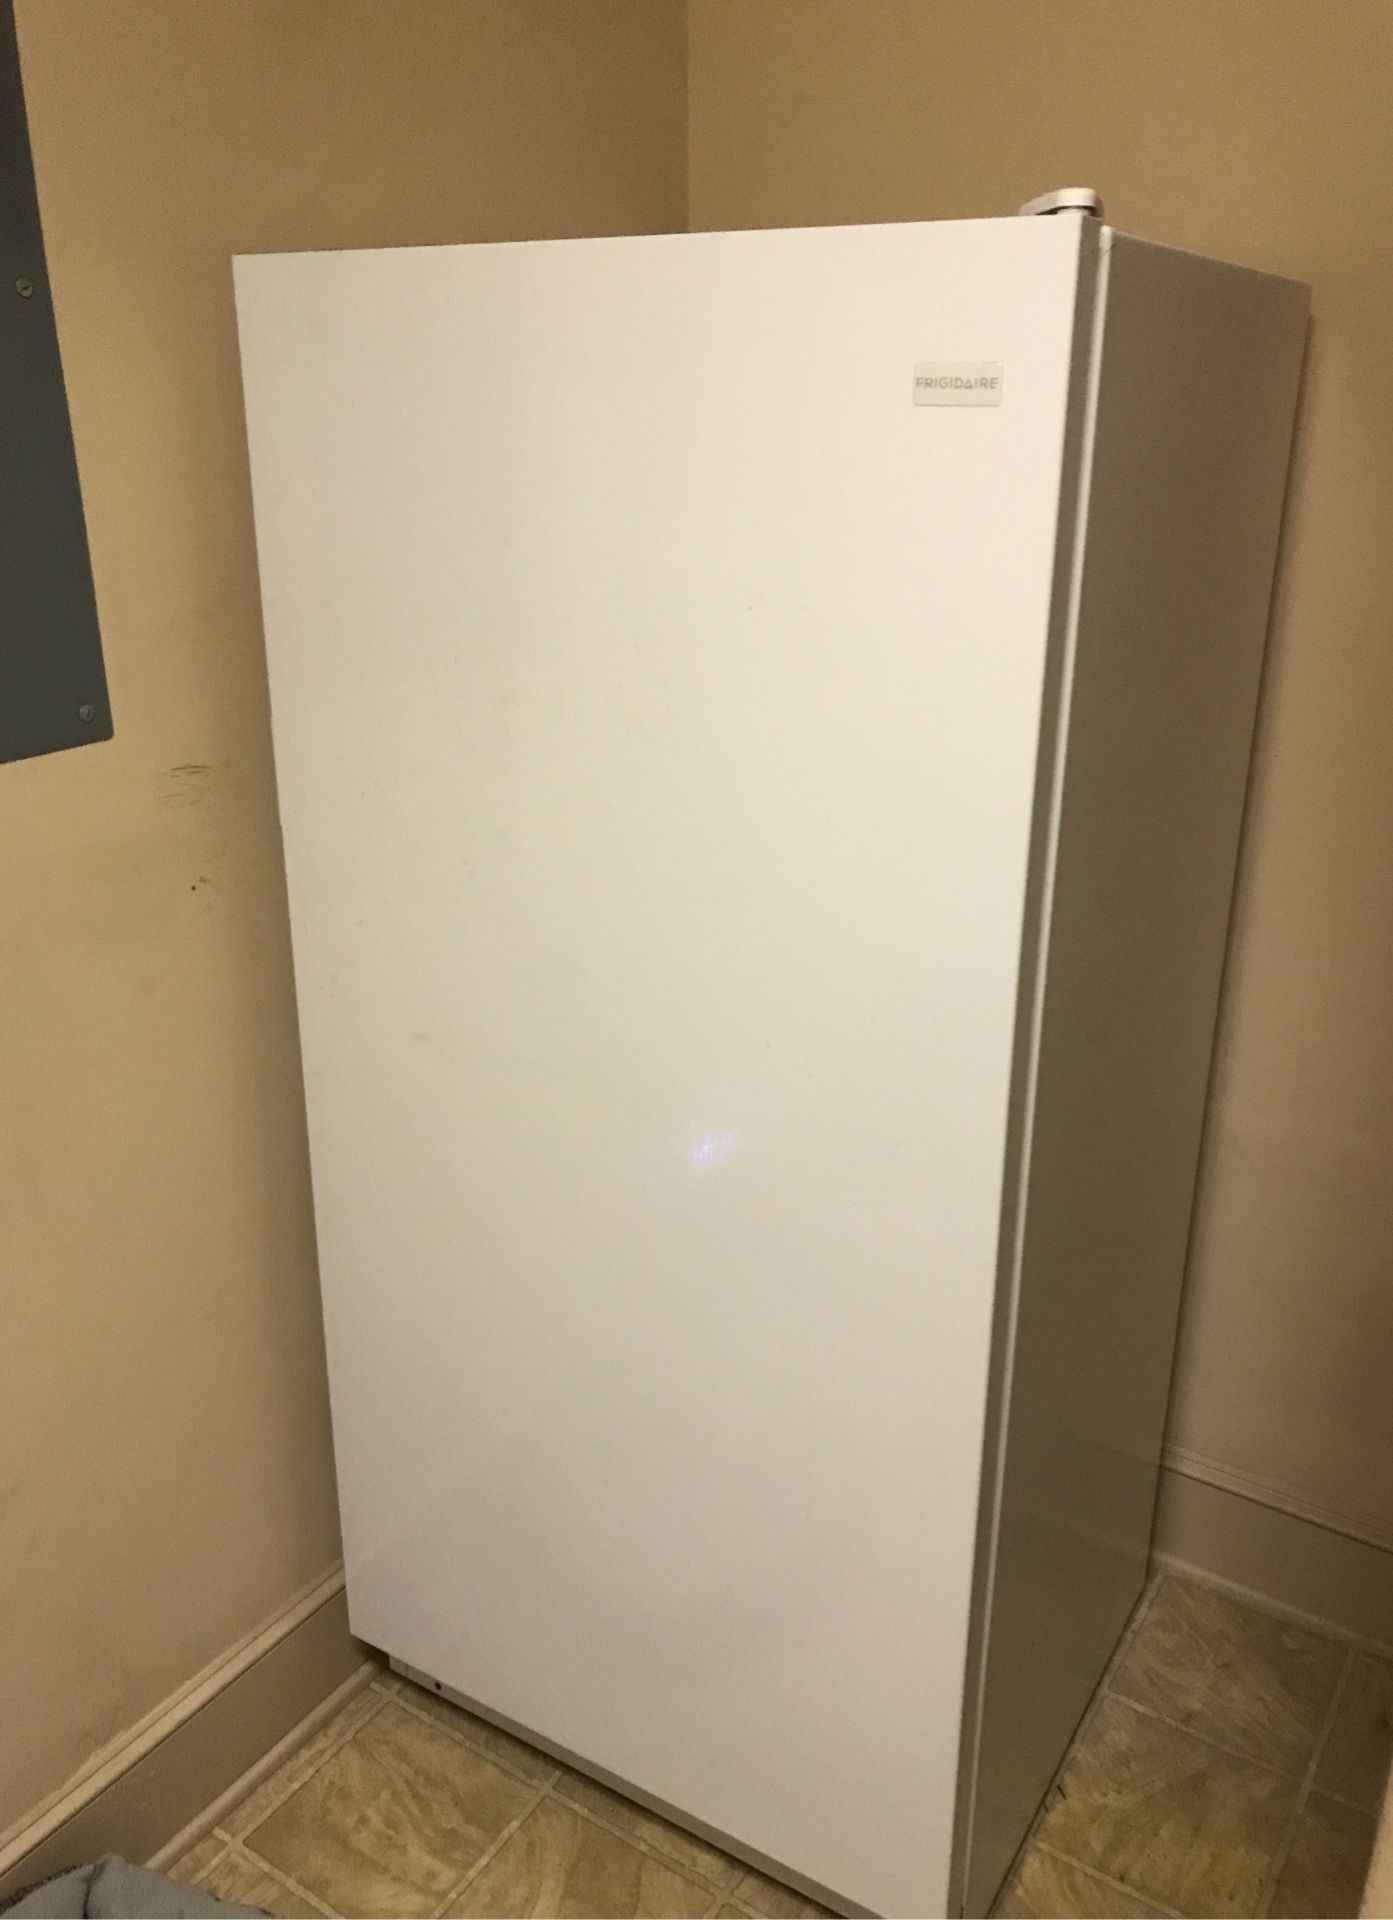 Large Frigidair Freezer